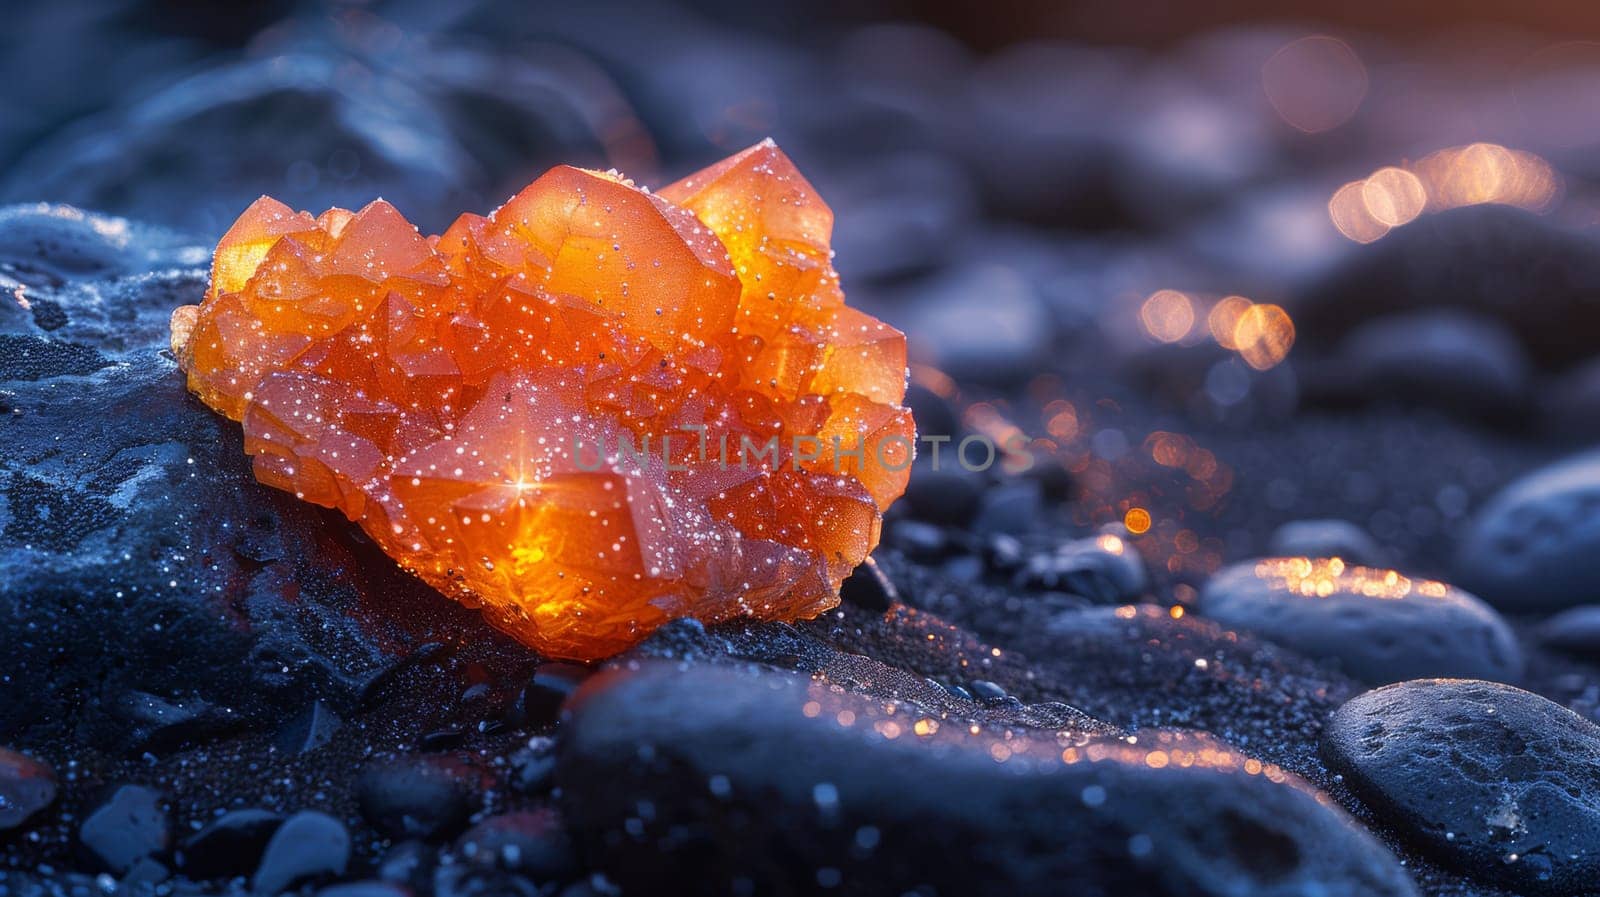 A close up of a orange rock sitting on some rocks